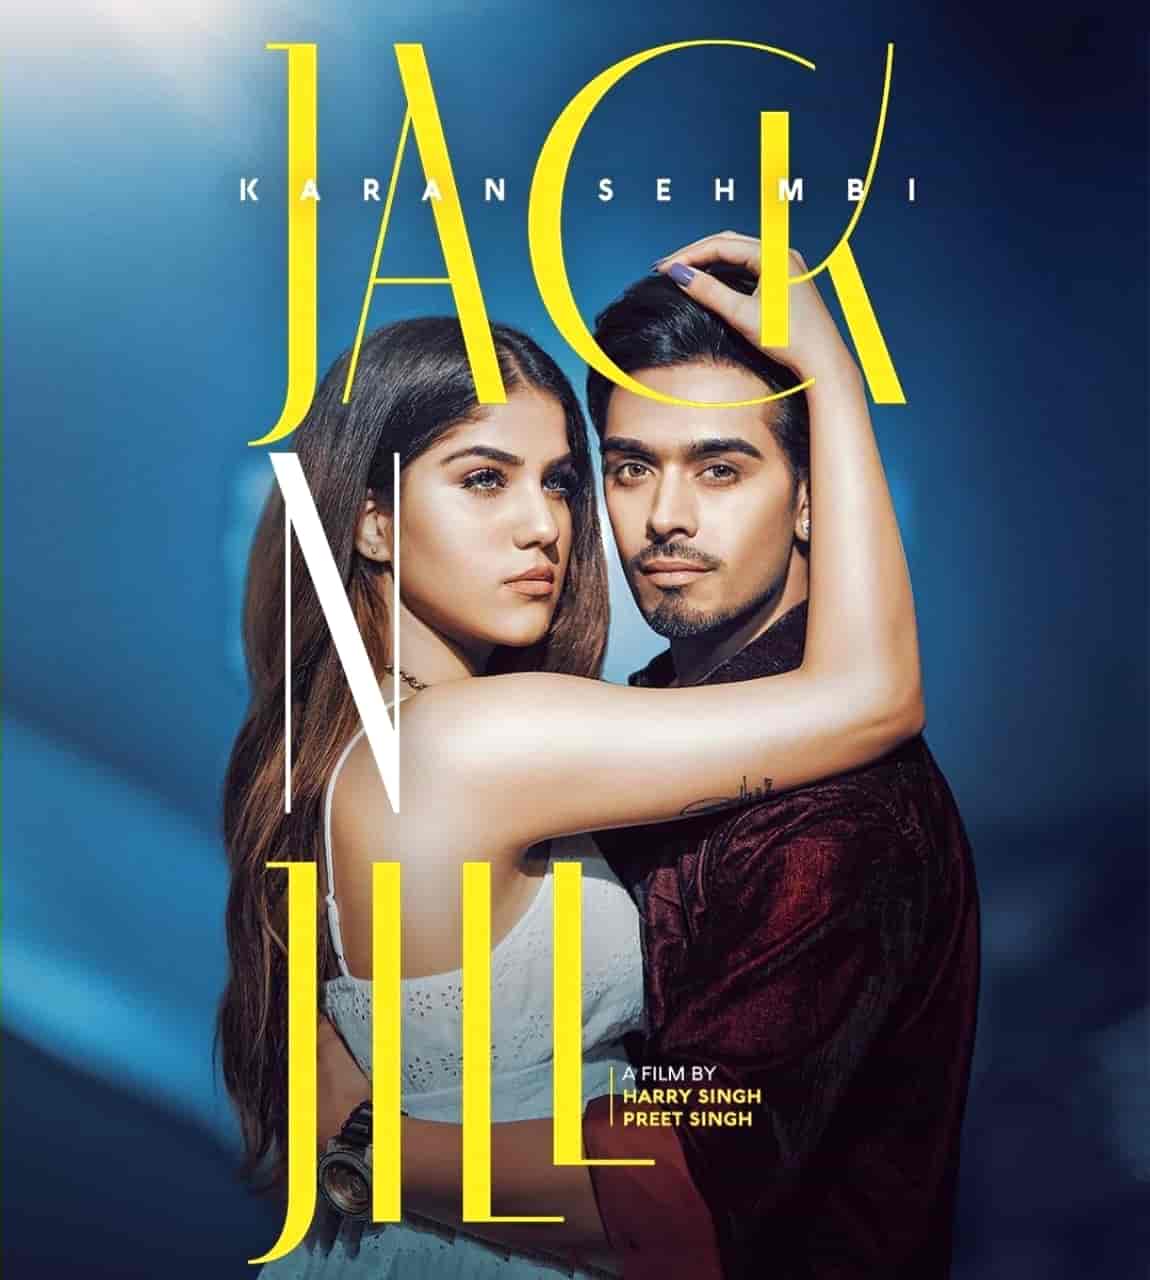 Jack N Jill Punjabi Song Image Features Karan Sehmbi and Aveera Singh